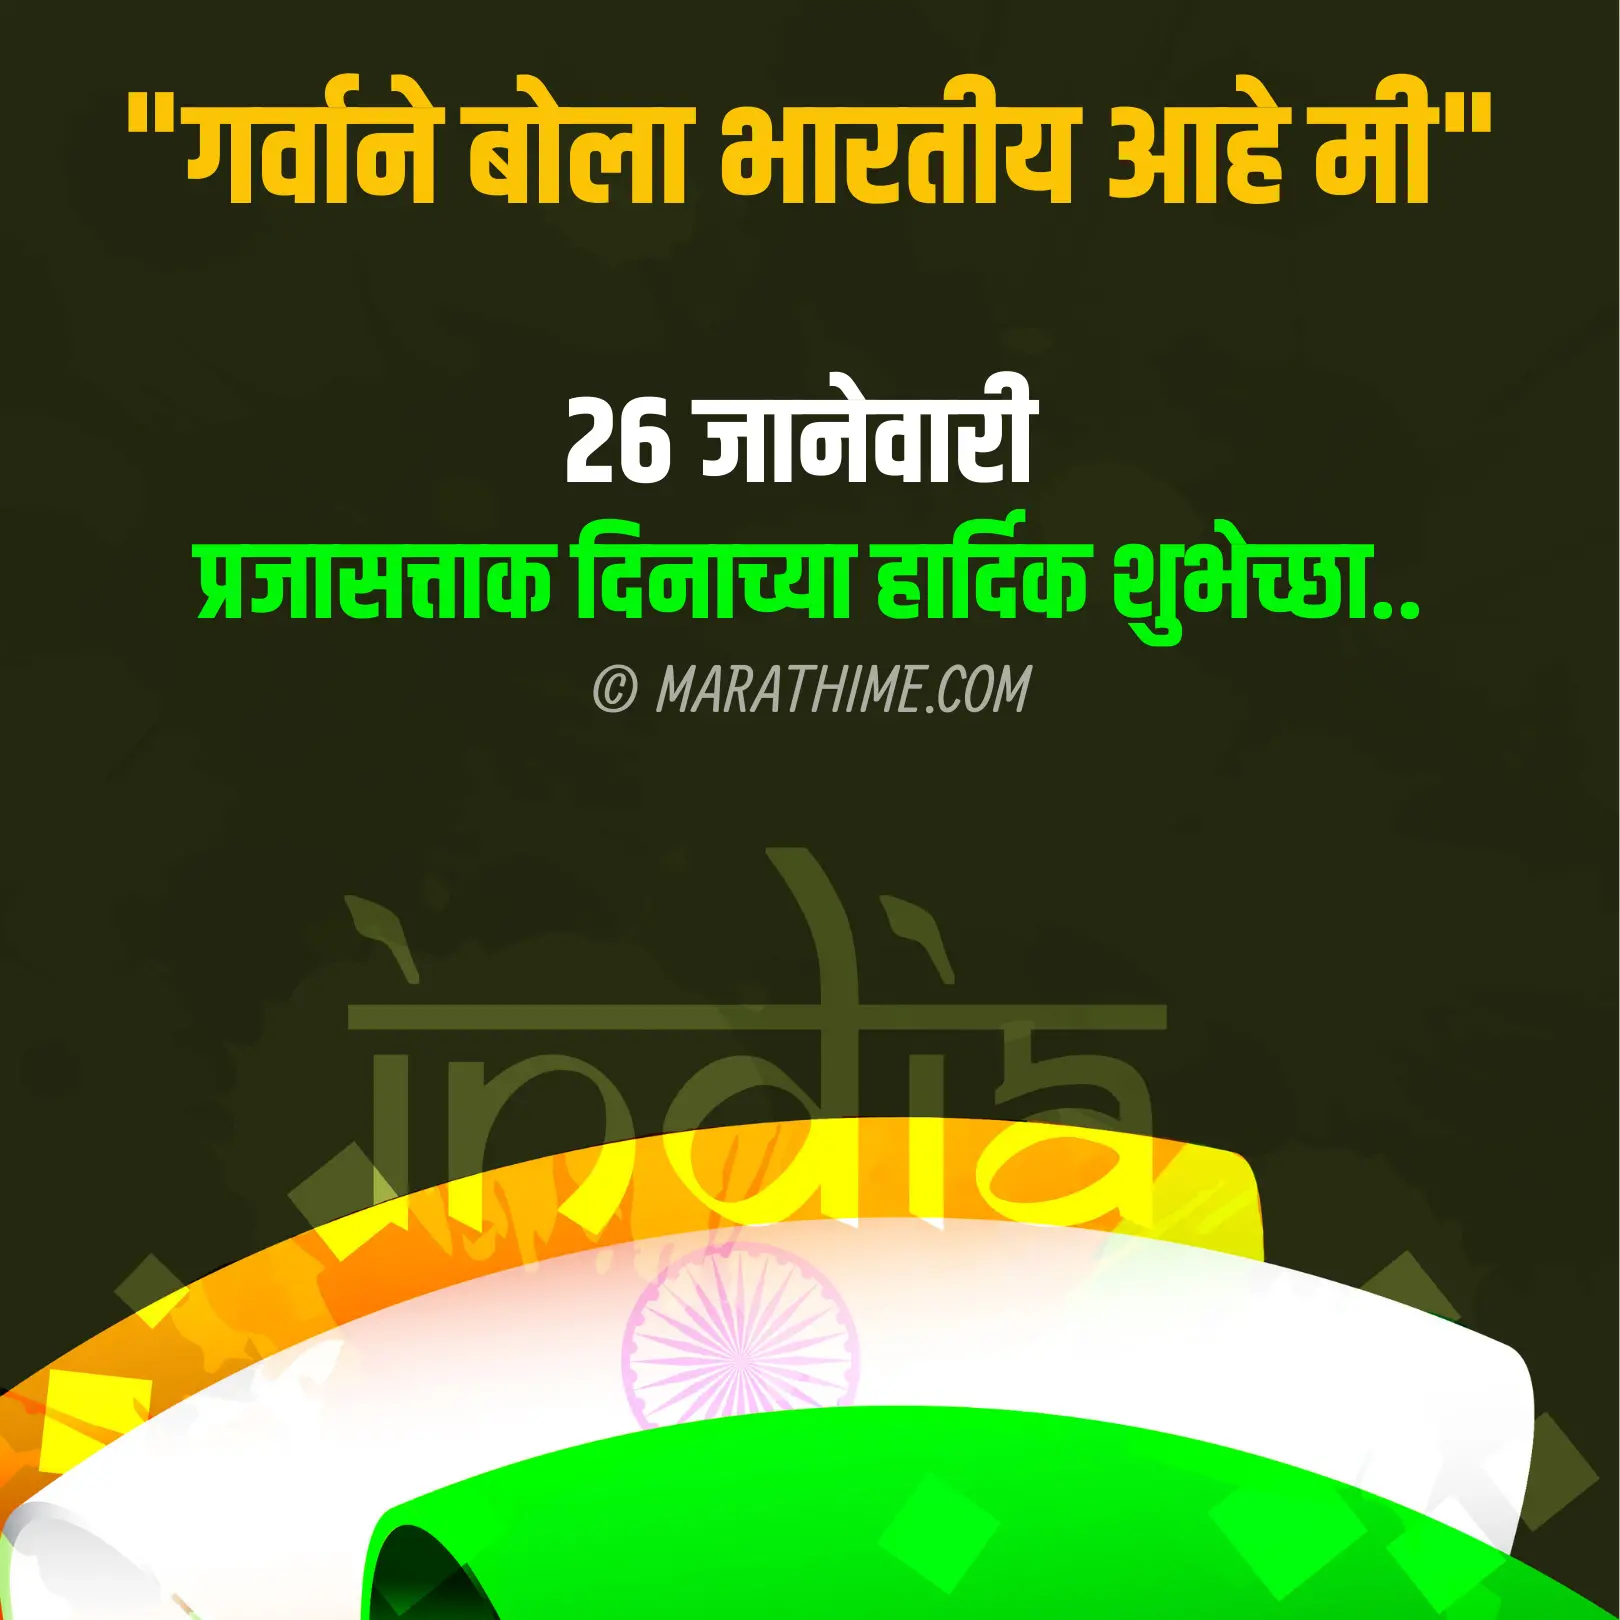 प्रजासत्ताक दिन शुभेच्छा-republic day quotes in marathi (17)